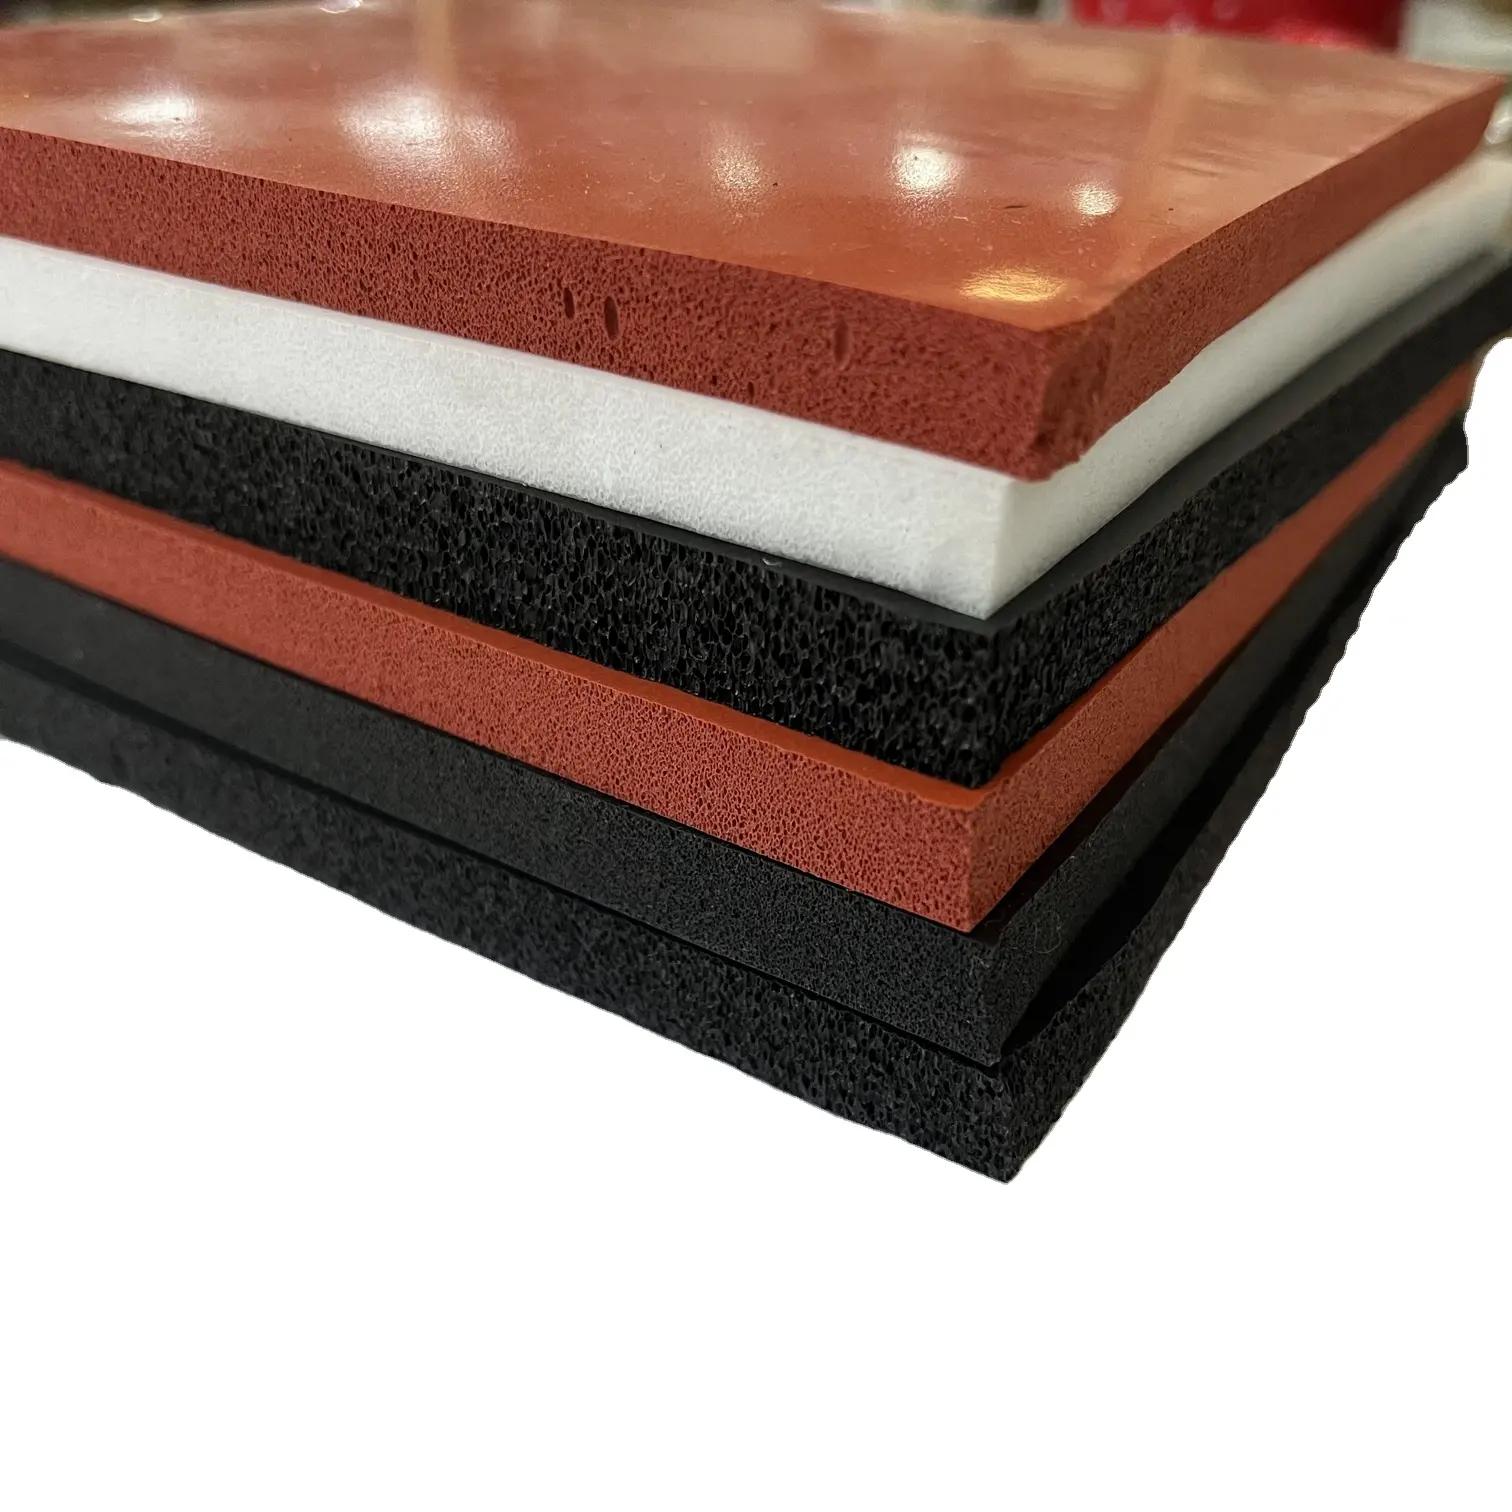 Soft Medium Firm Hardness Custom Made High Temperature Silicone Rubber Sheet Sponge Foam Pad For Heat Press Machine Iron Table